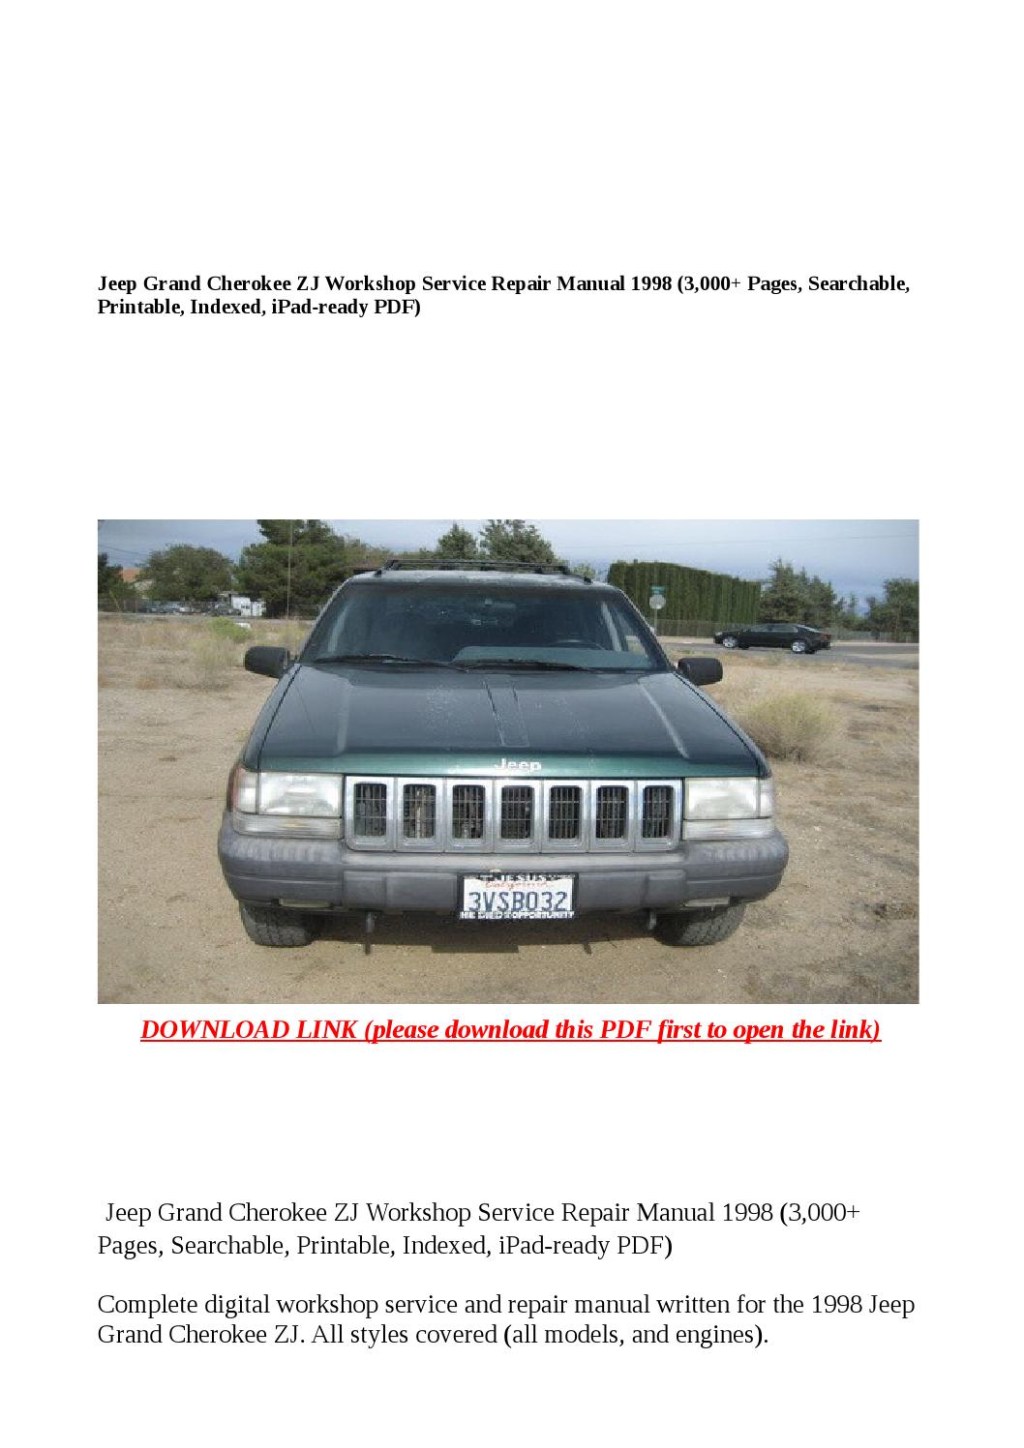 Picture of: Jeep grand cherokee zj workshop service repair manual  (,